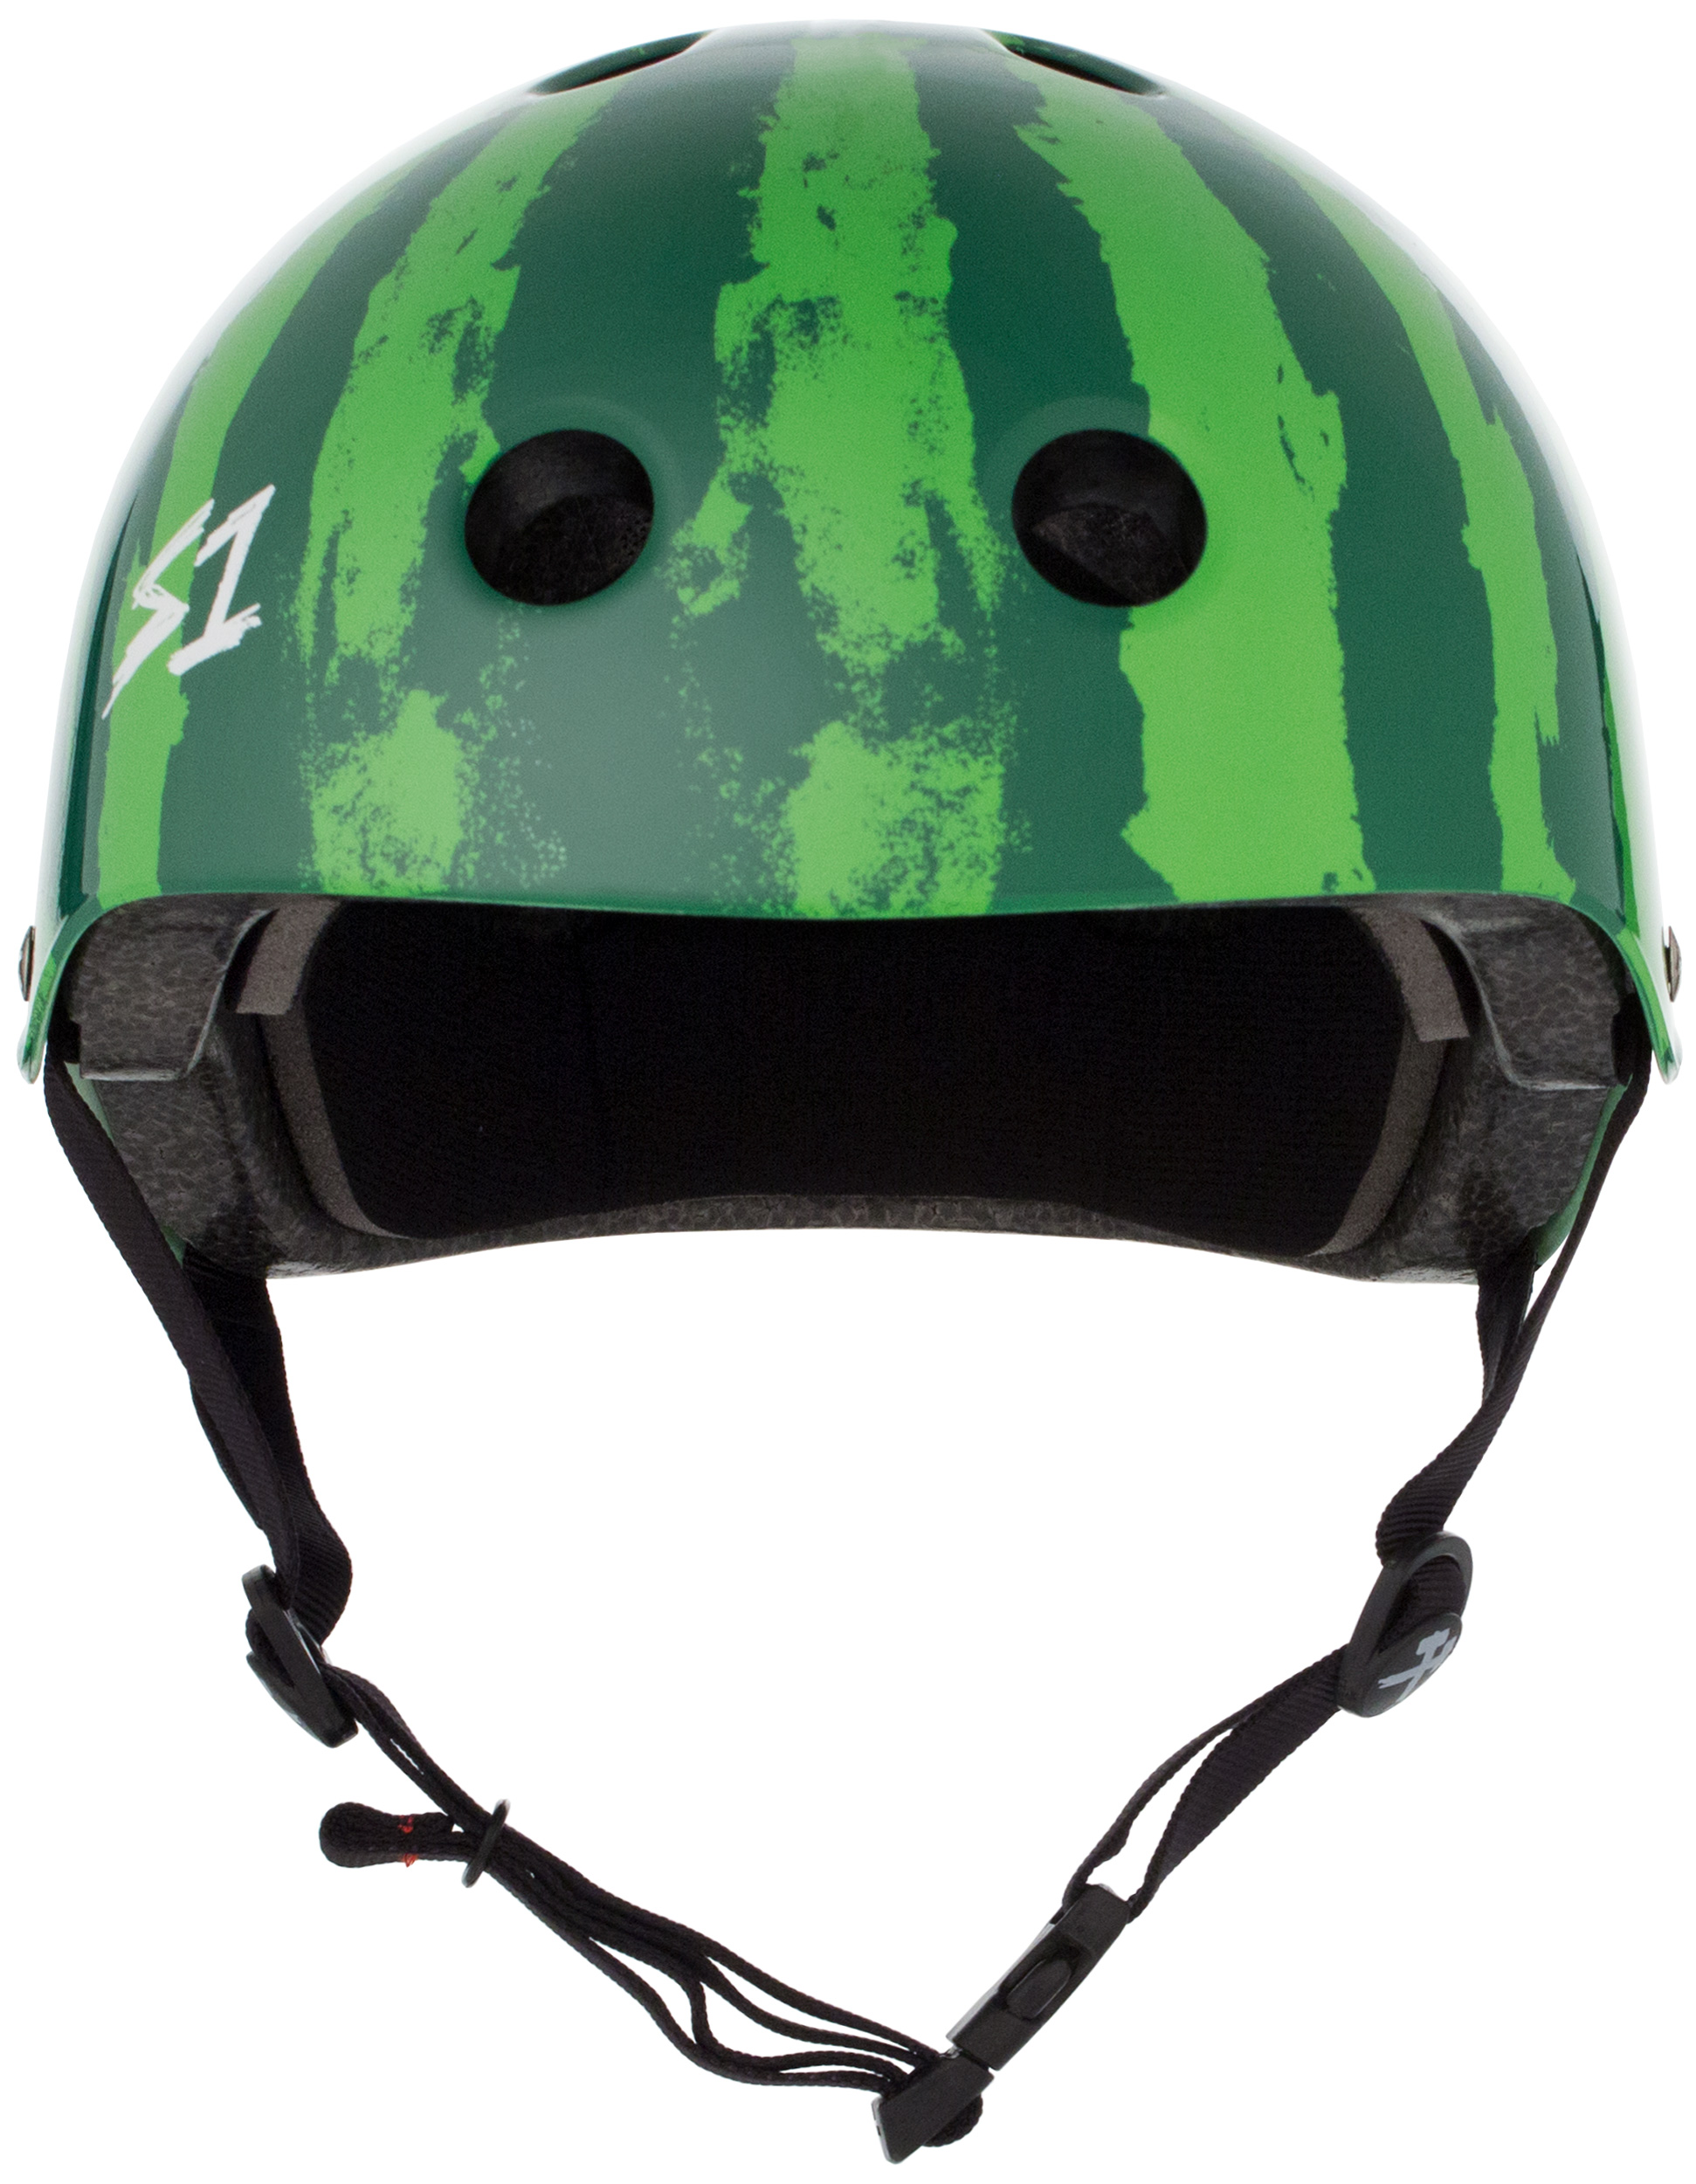 S1 Lifer Helmet – Watermelon : SOne Helmet